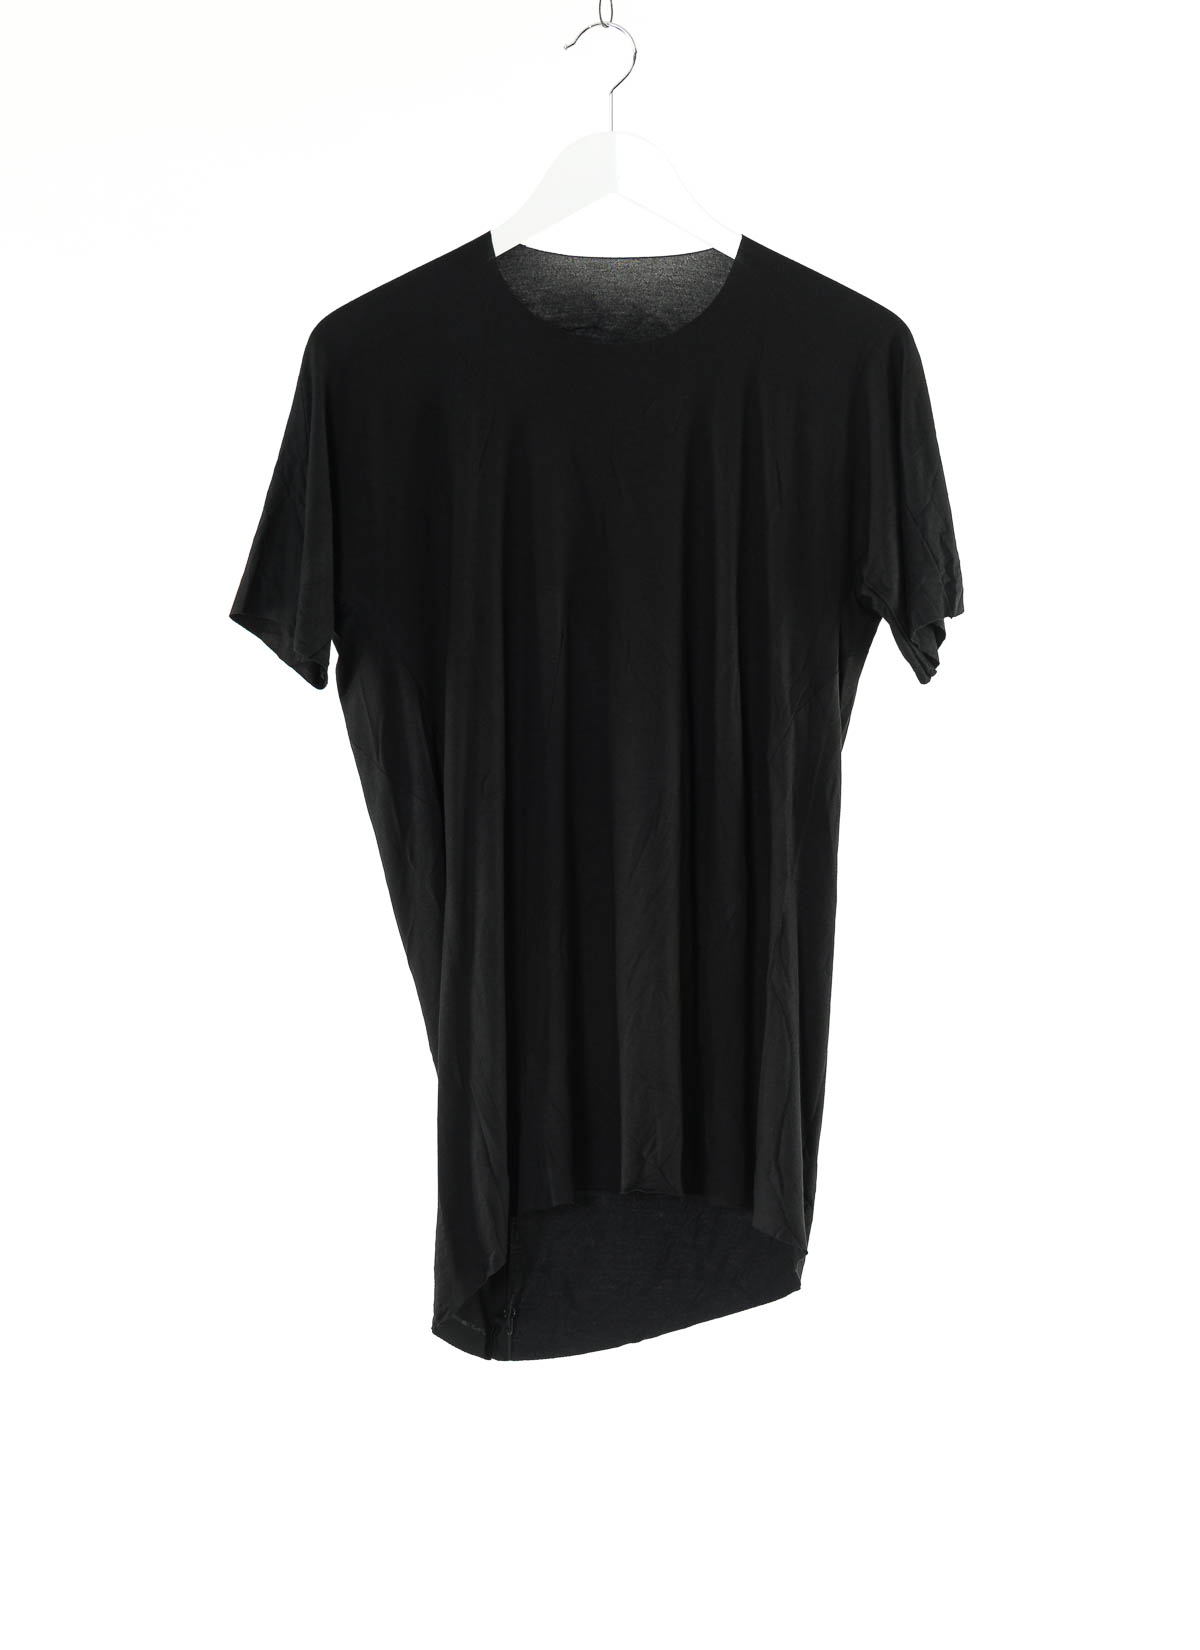 hide-m | LEON EMANUEL BLANCK Distortion GS T-Shirt, black